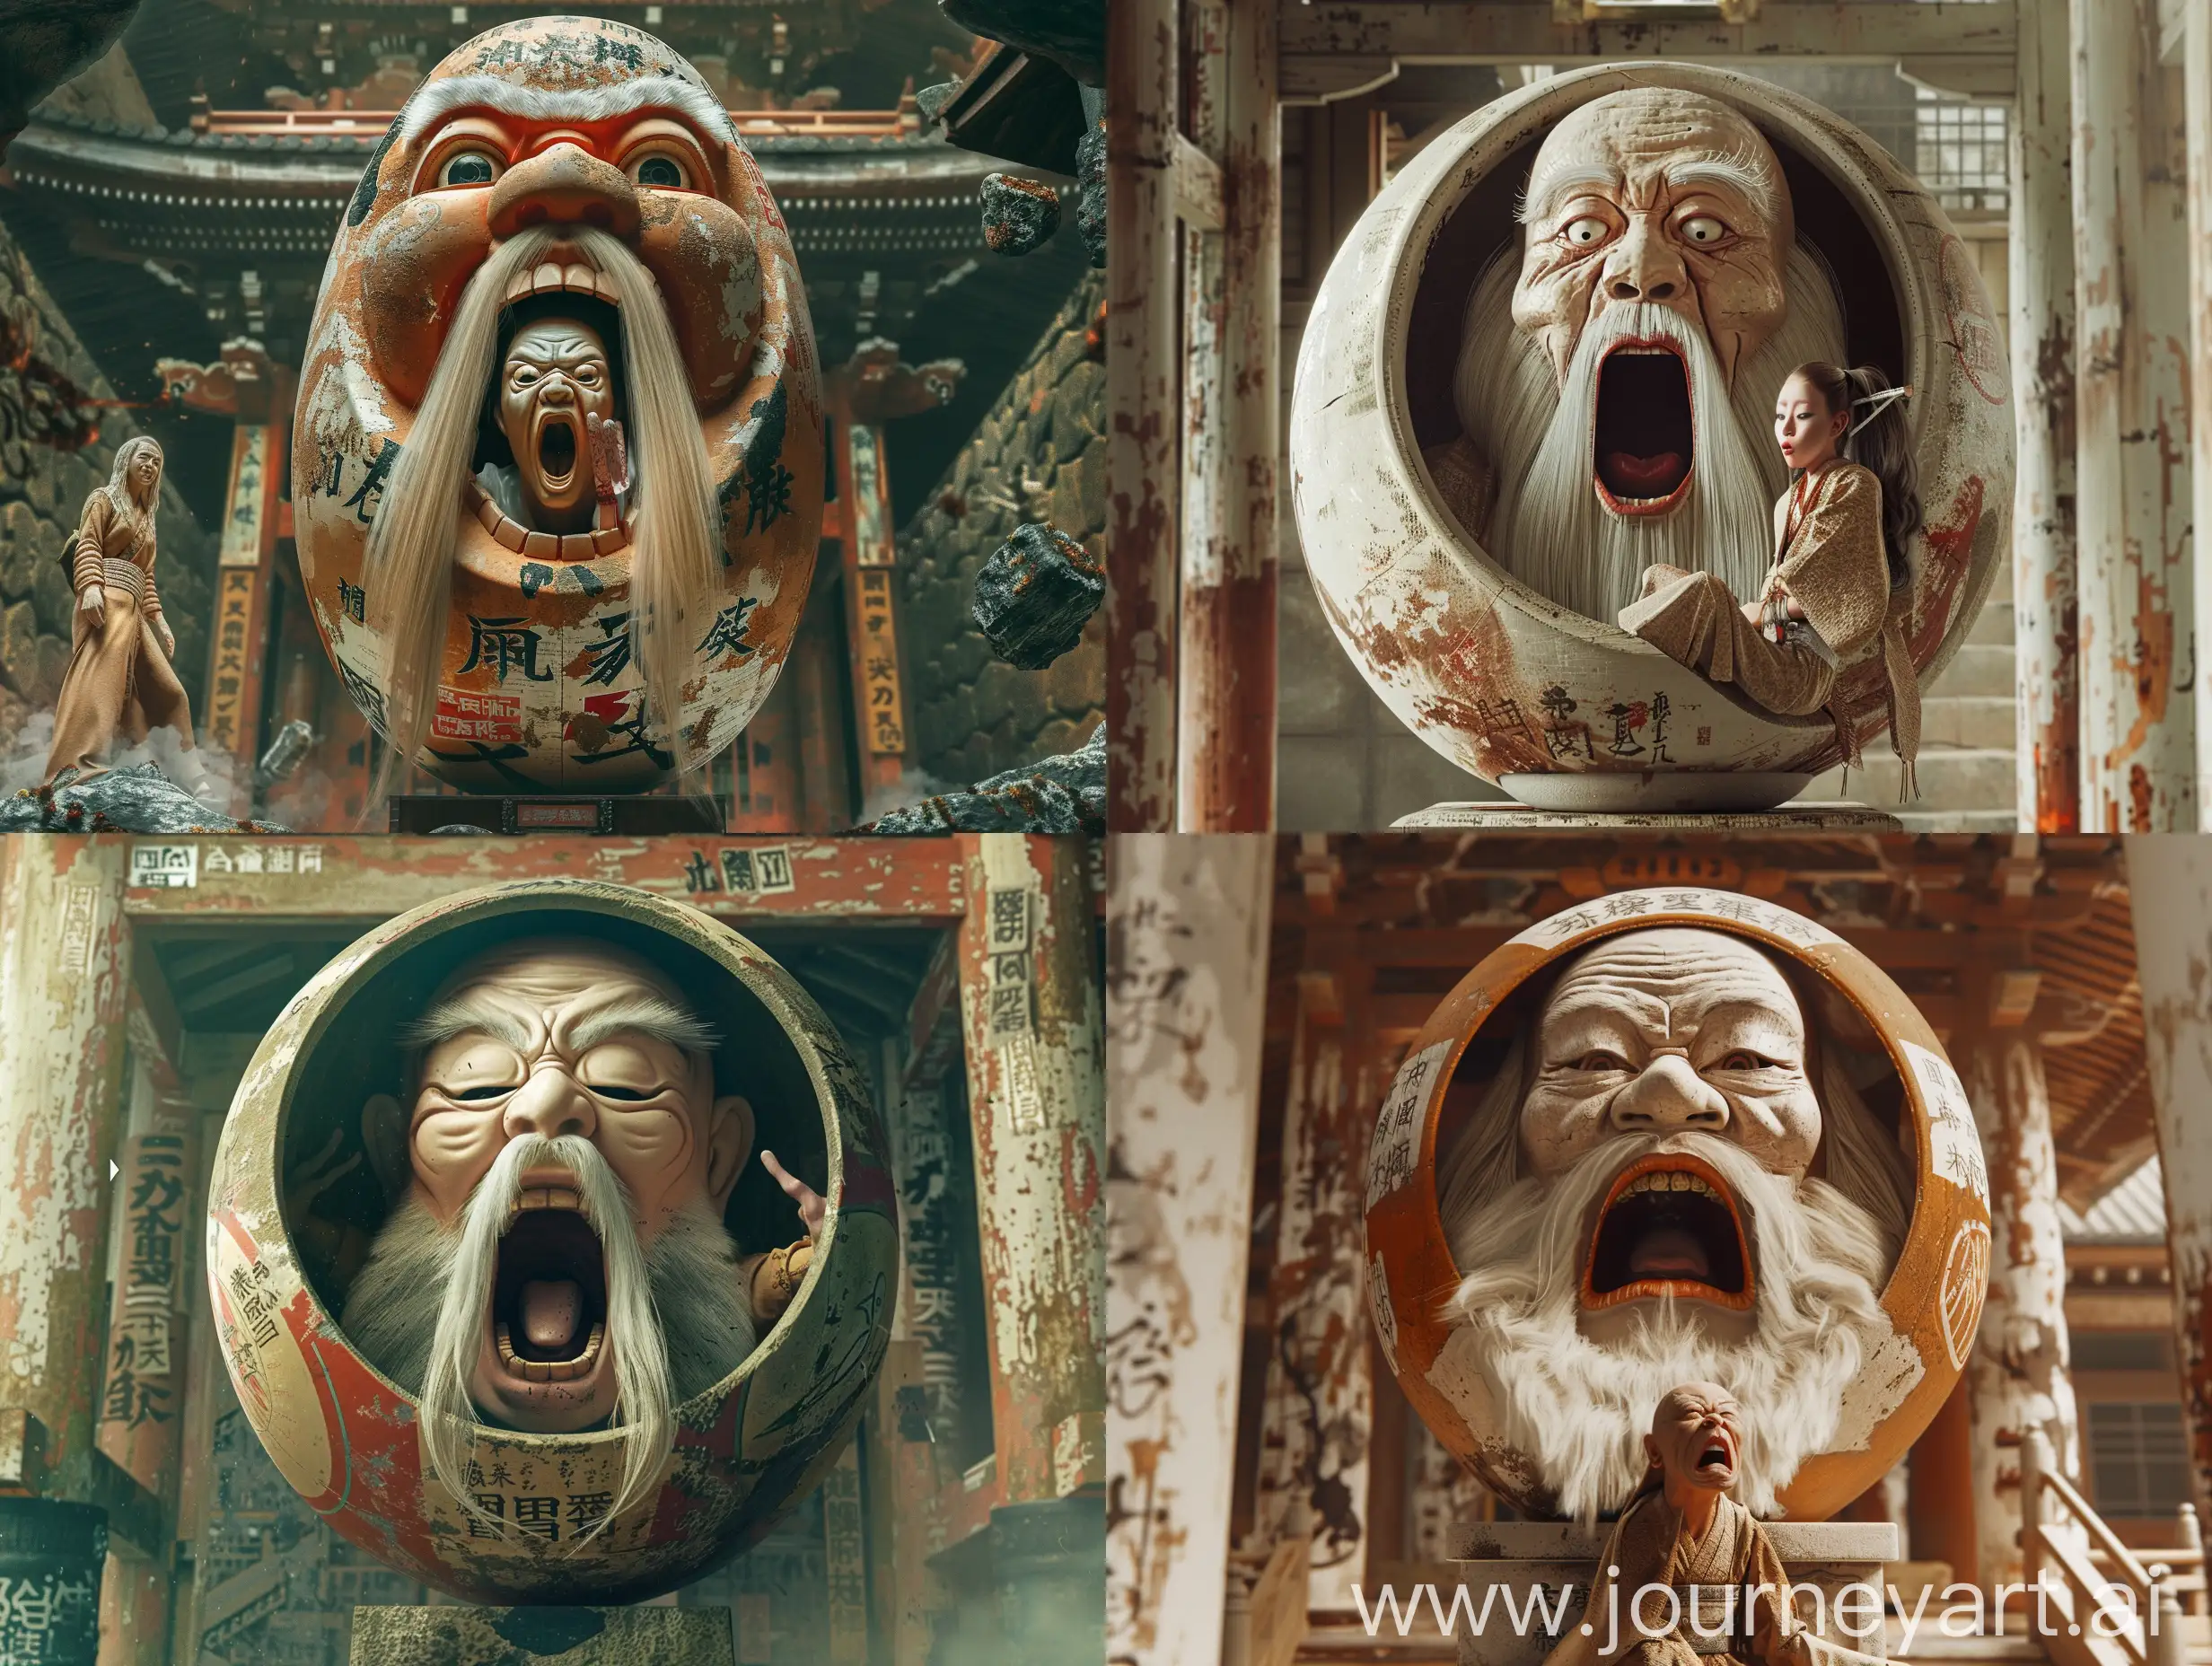 Cinematic-Realism-Yokai-Daruma-Guarding-Ancient-Tokyo-Shrine-Abyss